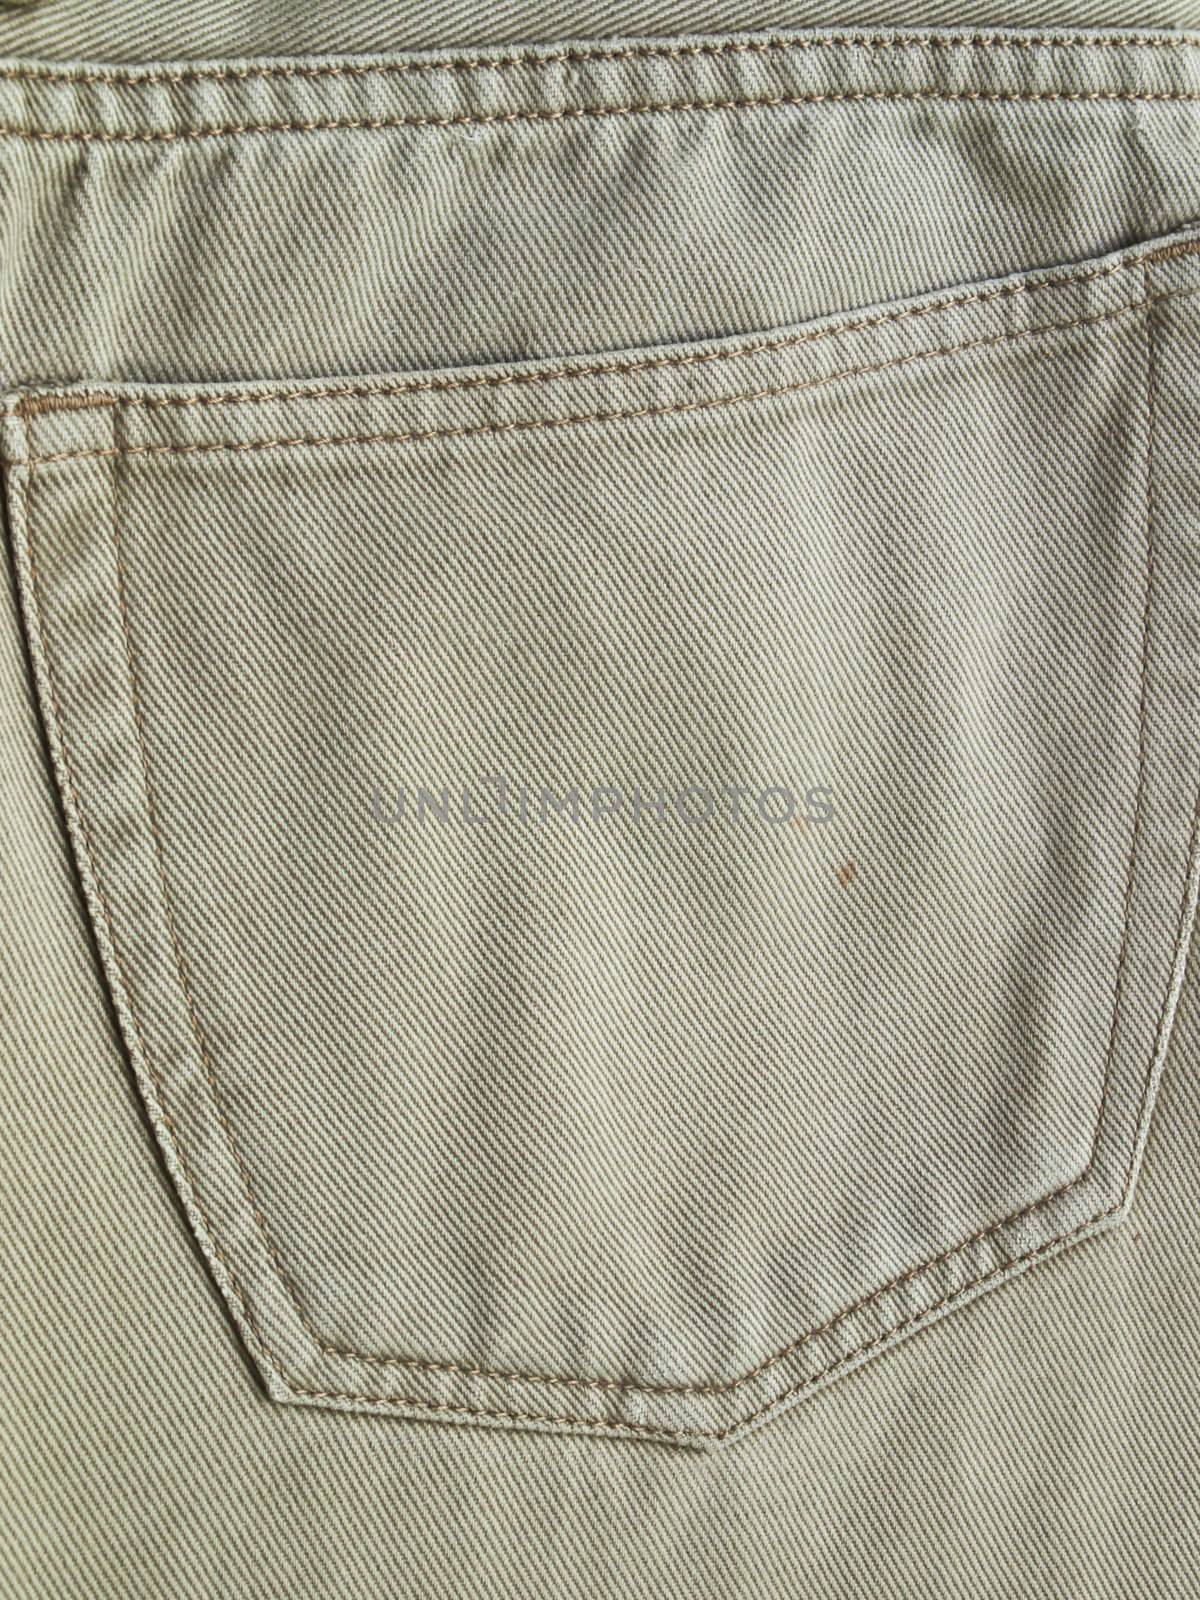 Close up back pocket on khaki jean pants by gururugu